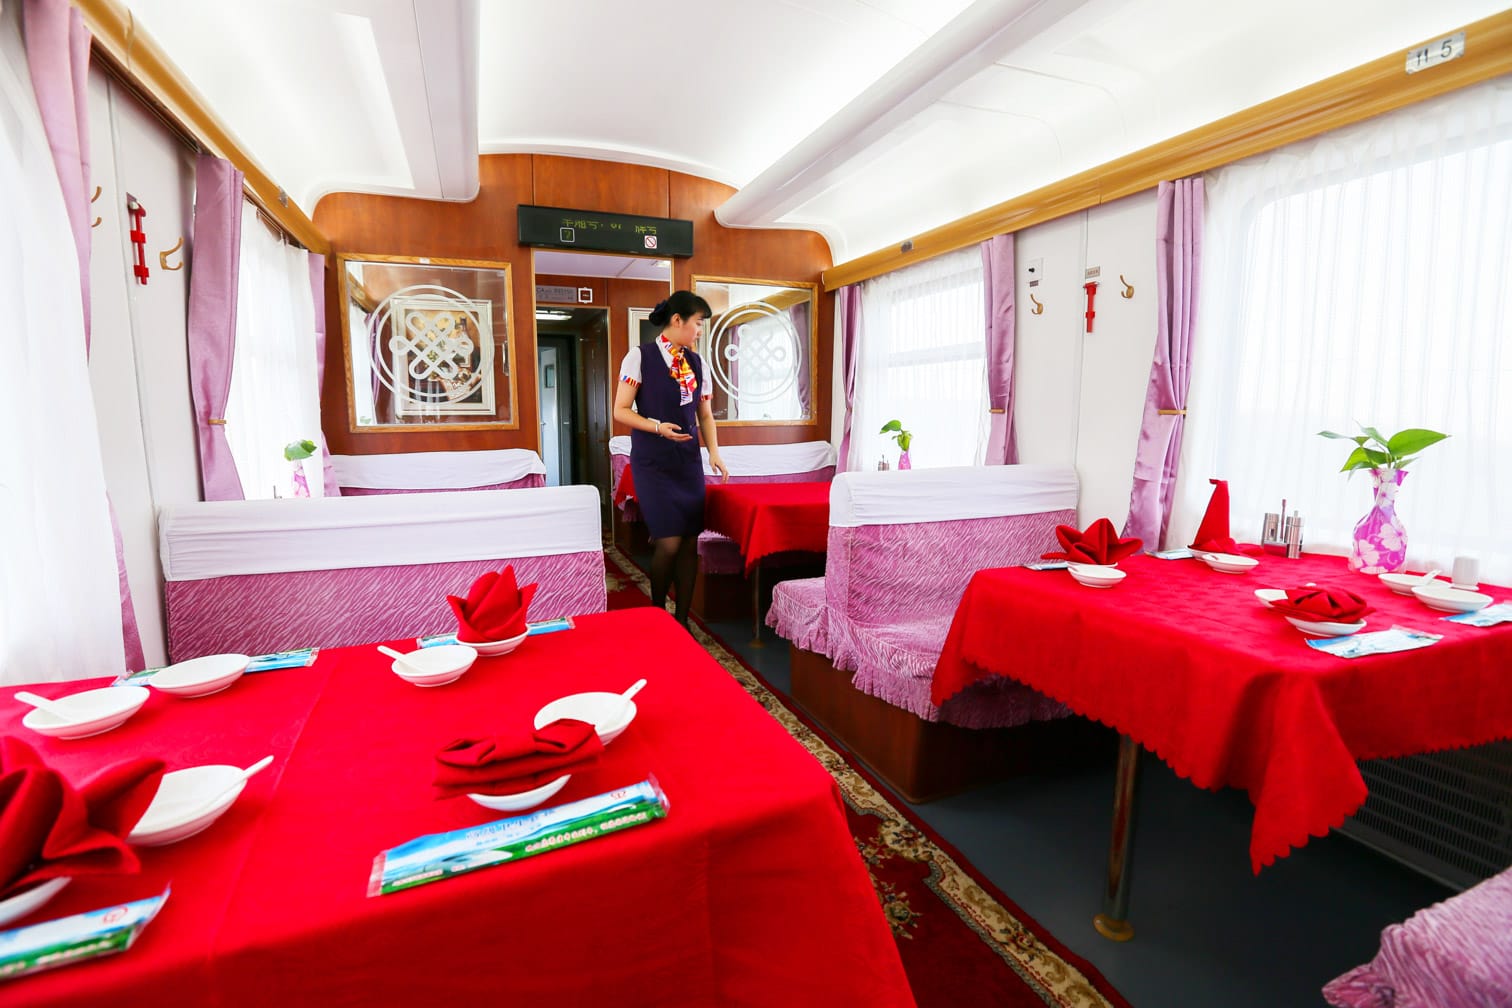 Interior of the restaurant on the Shangri-La Express train